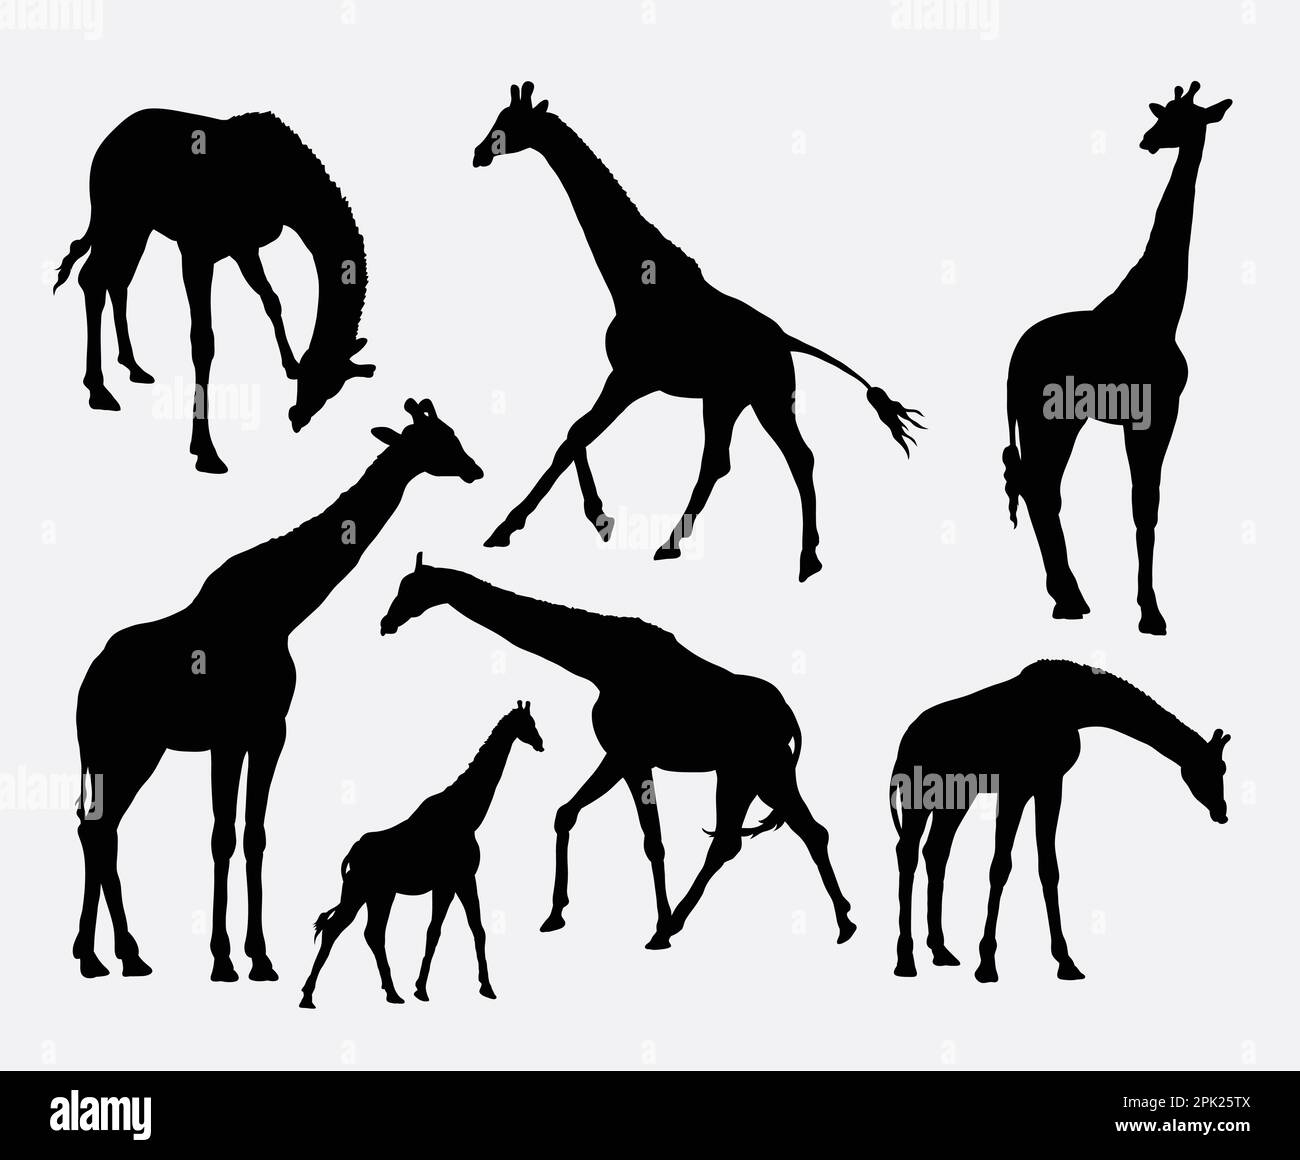 Giraffe animal silhouettes Stock Vector